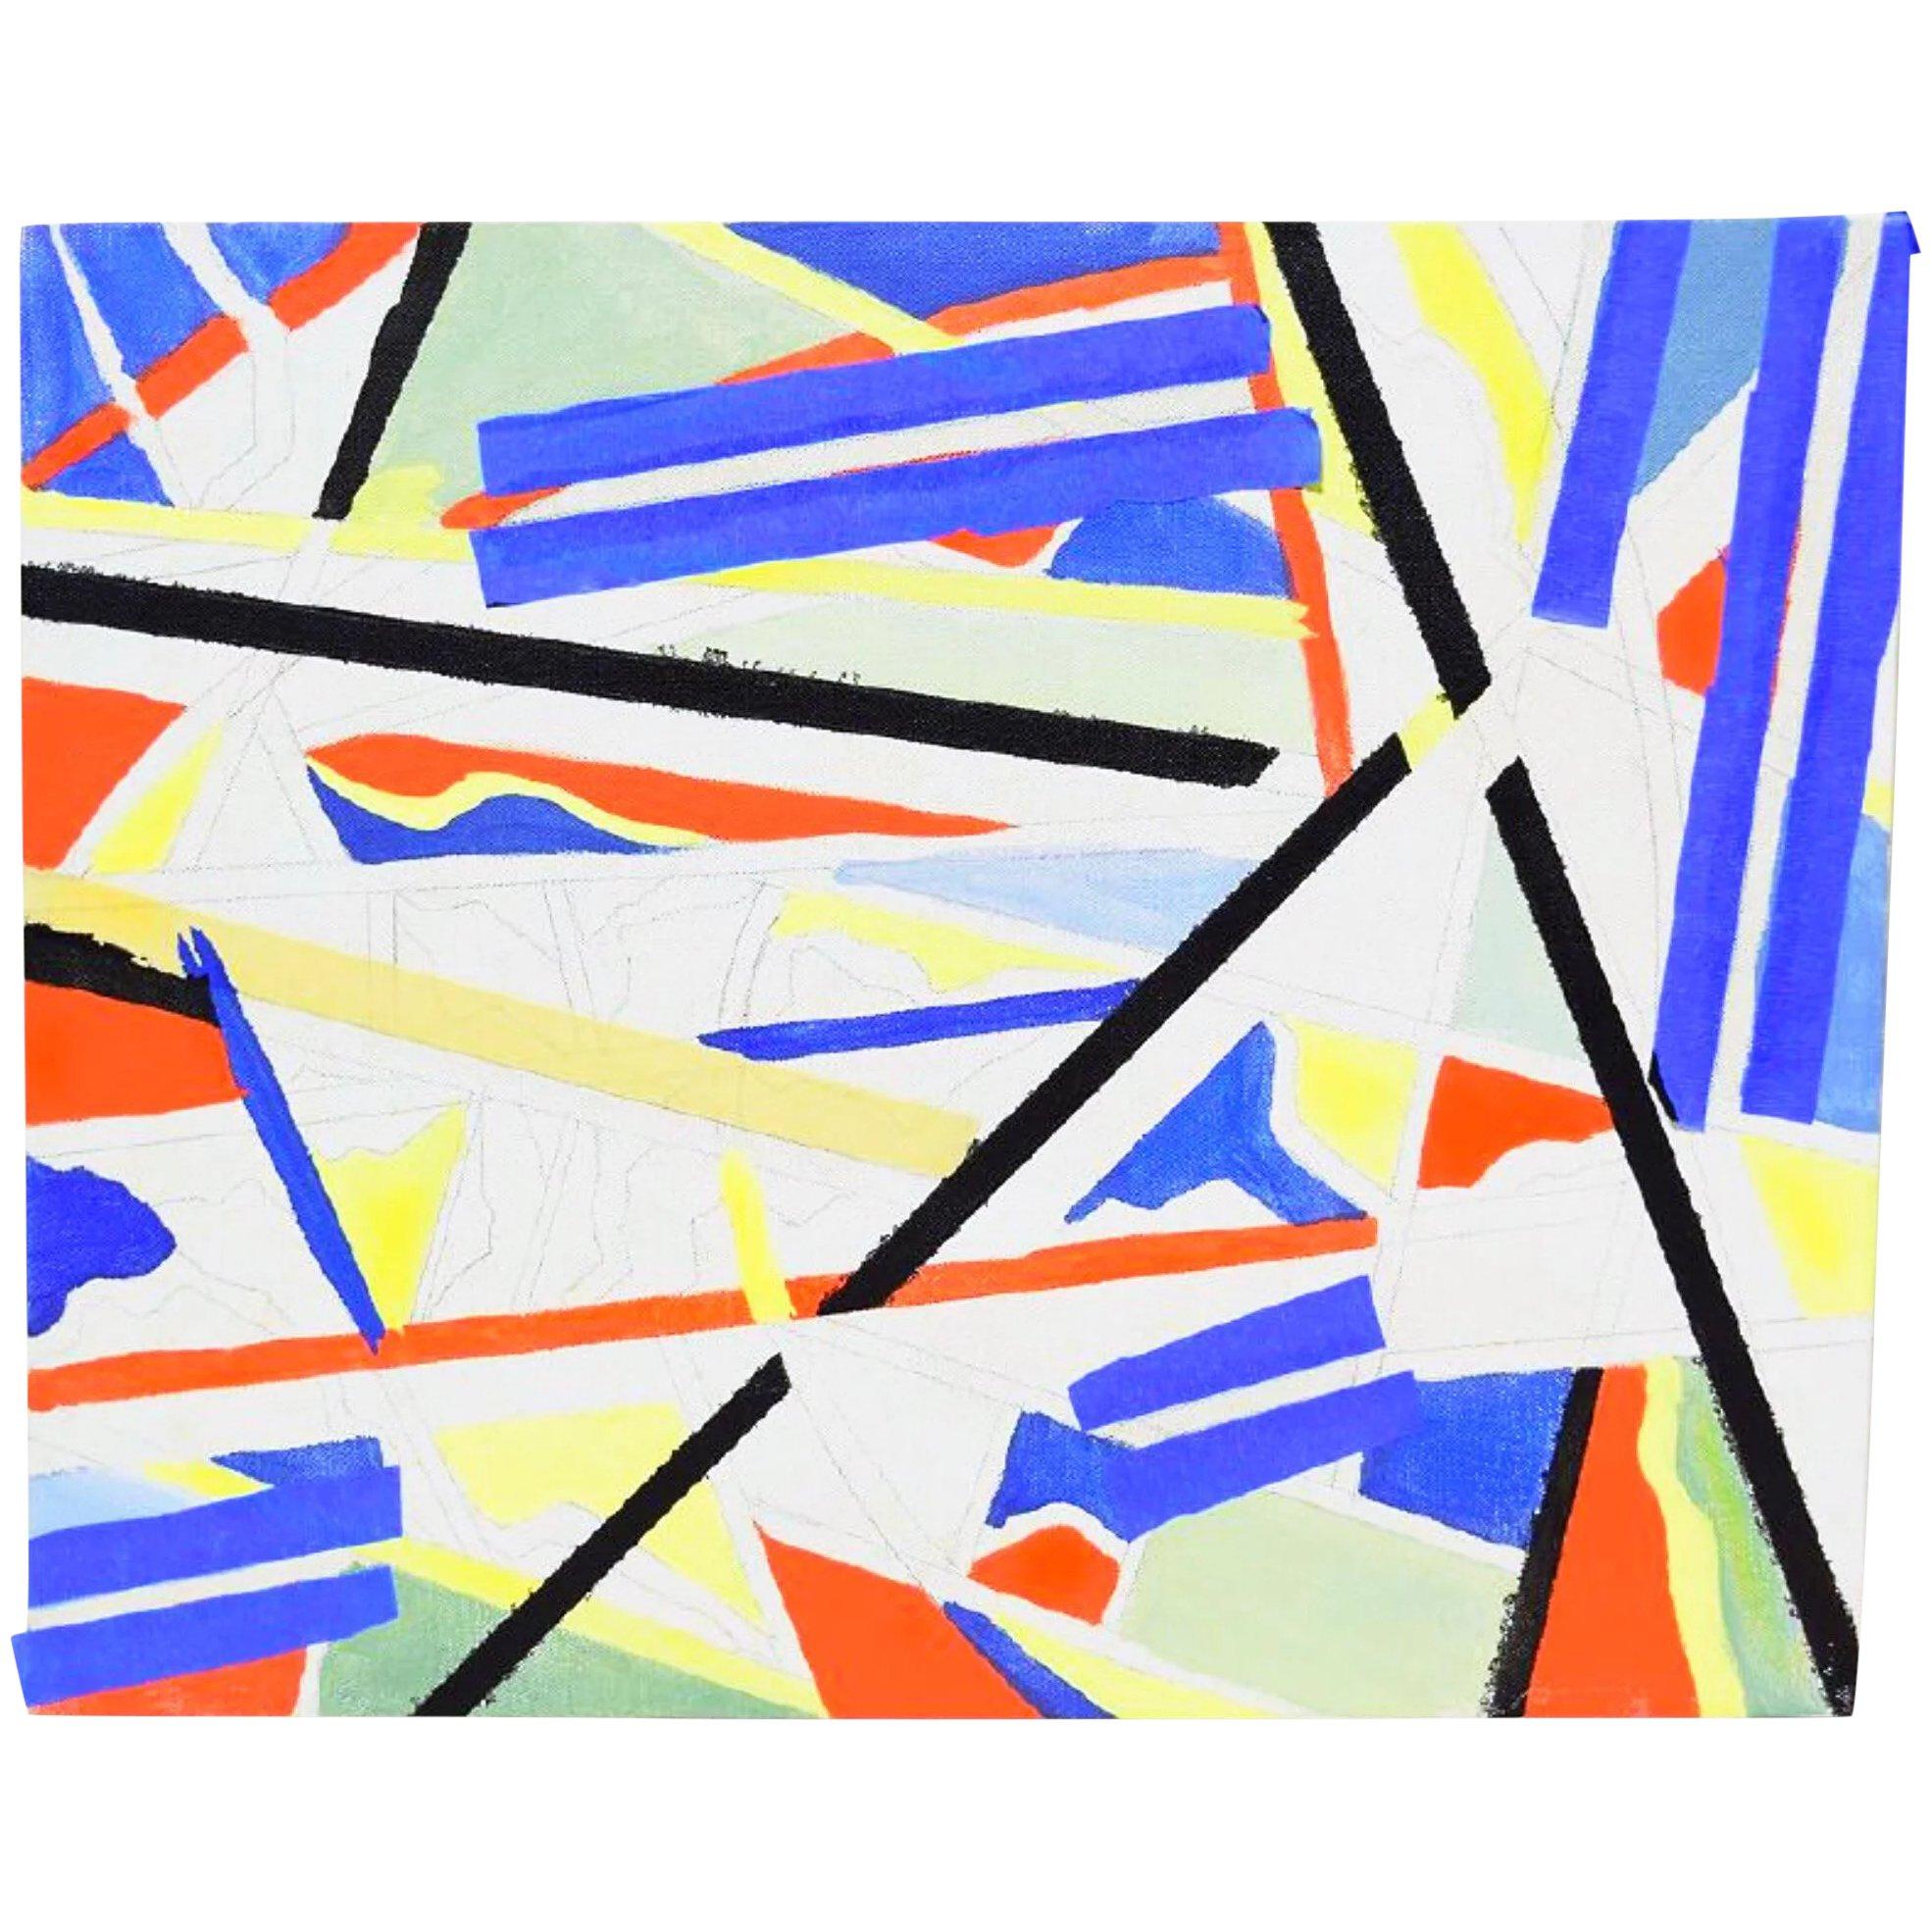 Óleo sobre lienzo posmoderno expresionista abstracto de bordes duros por Salvatore Grippi en venta